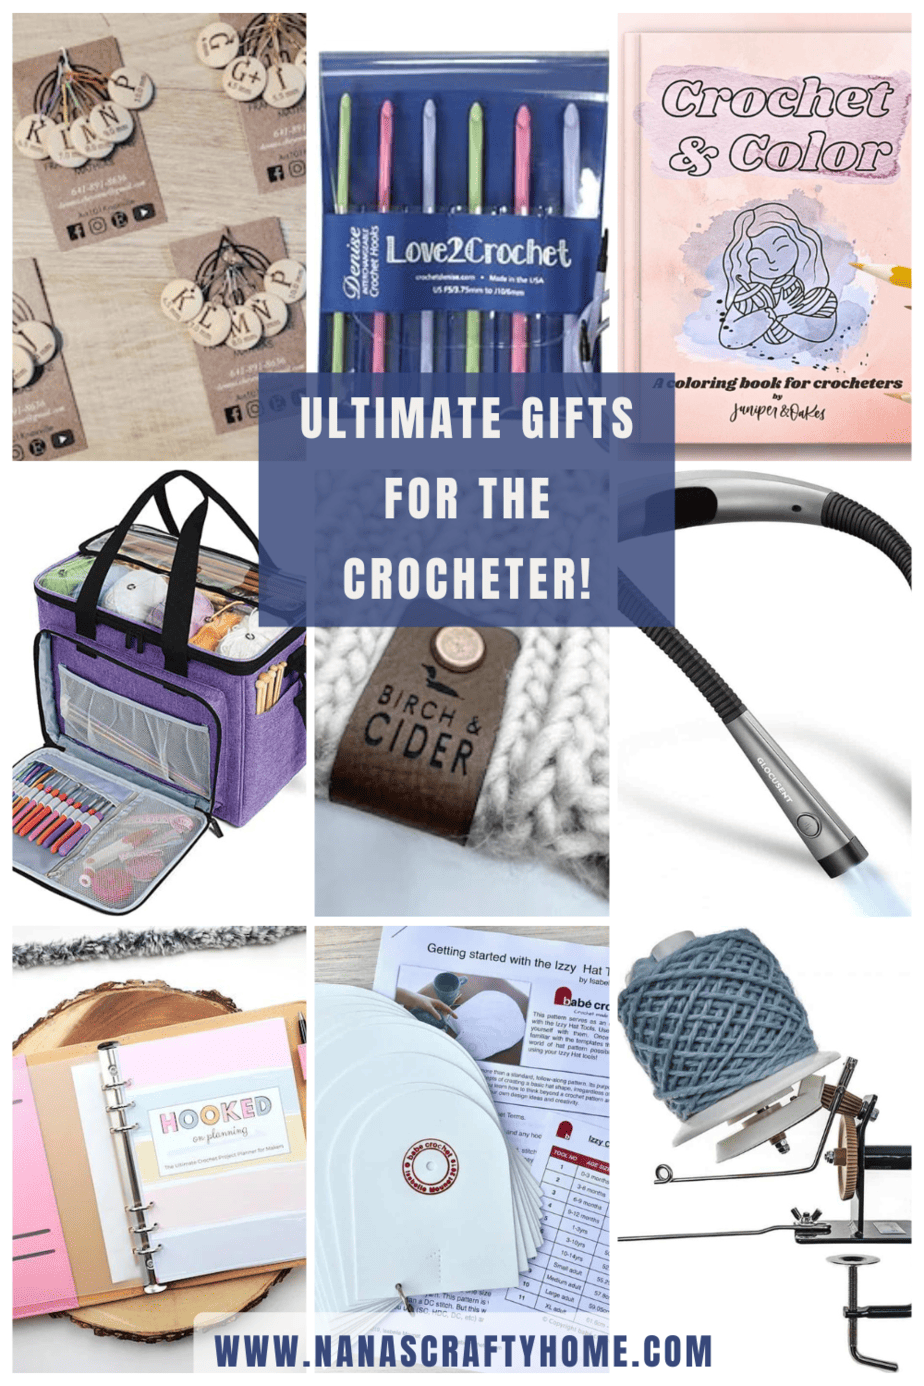 Ultimate gift list for crocheters